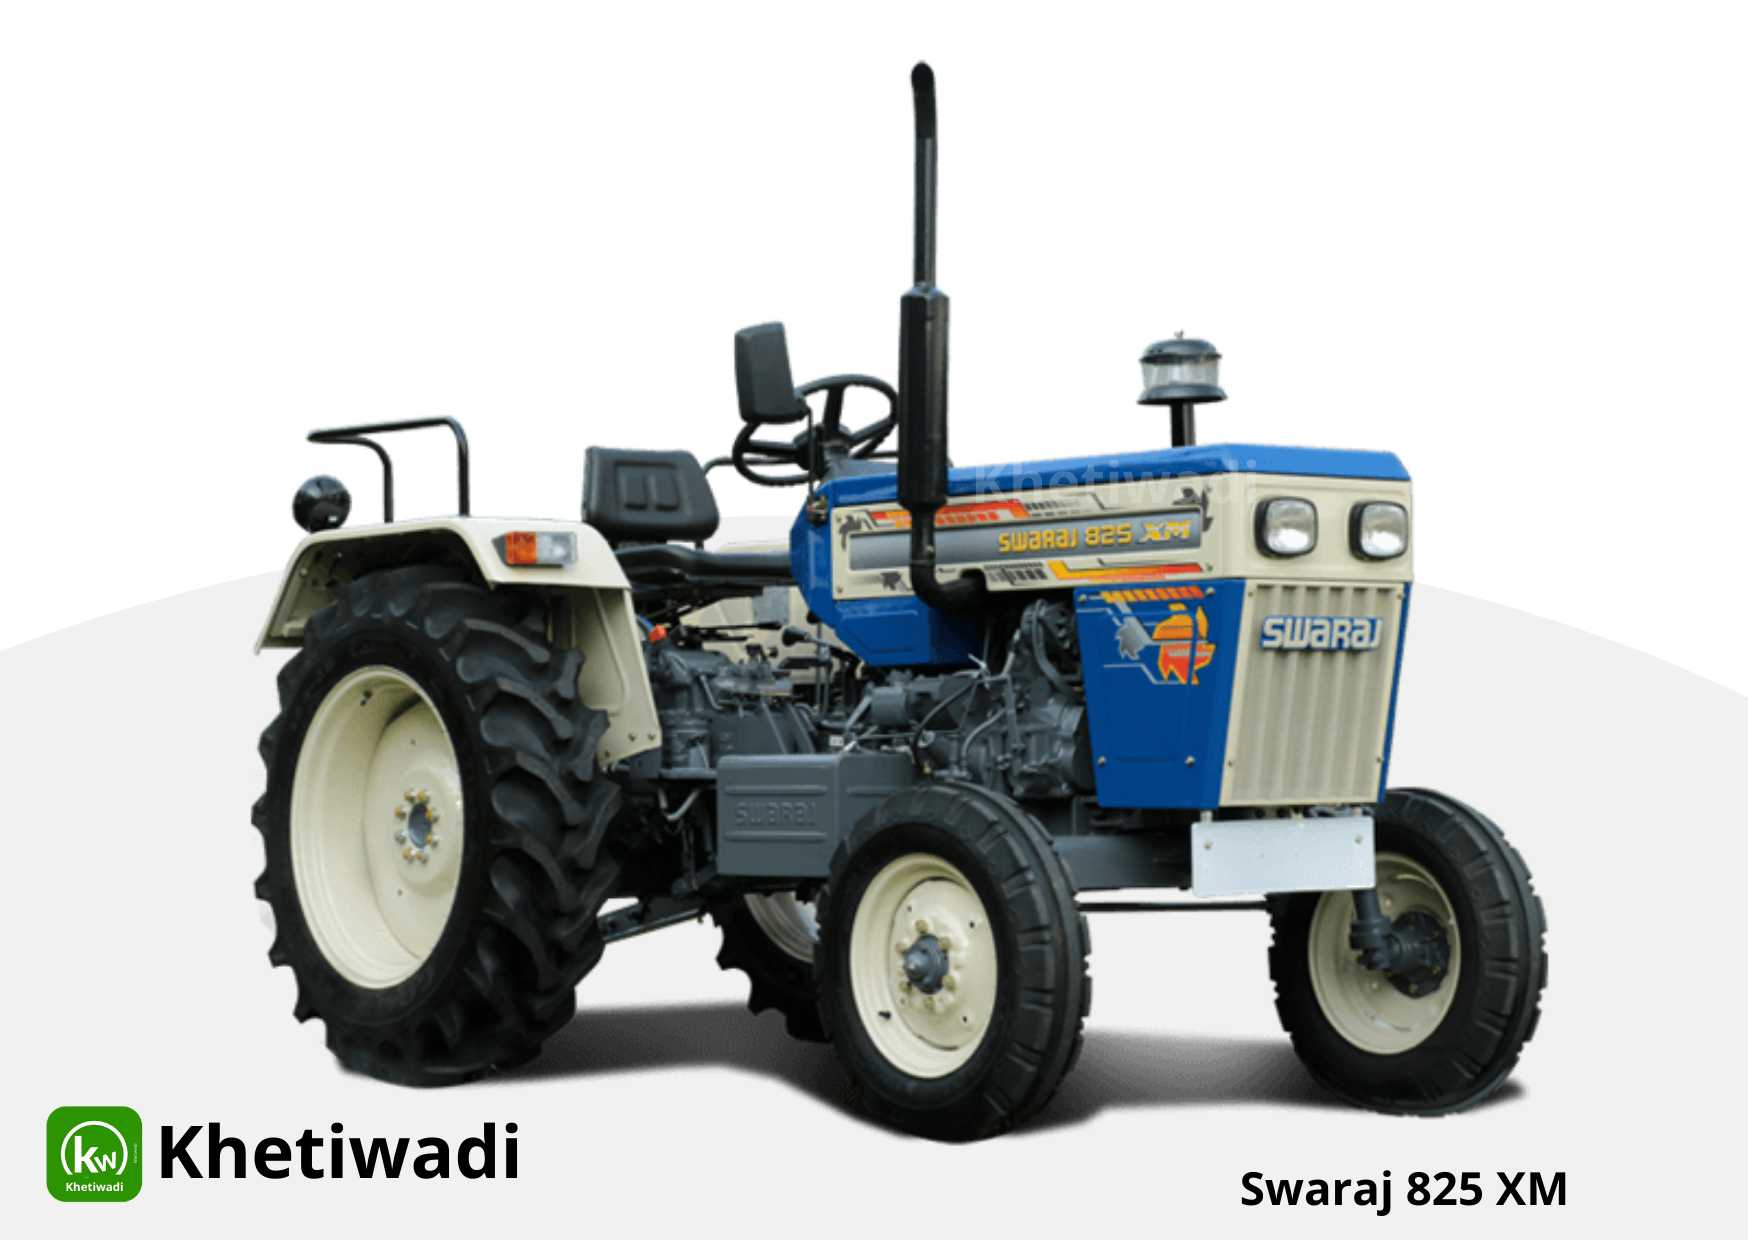 Swaraj 825 XM full detail